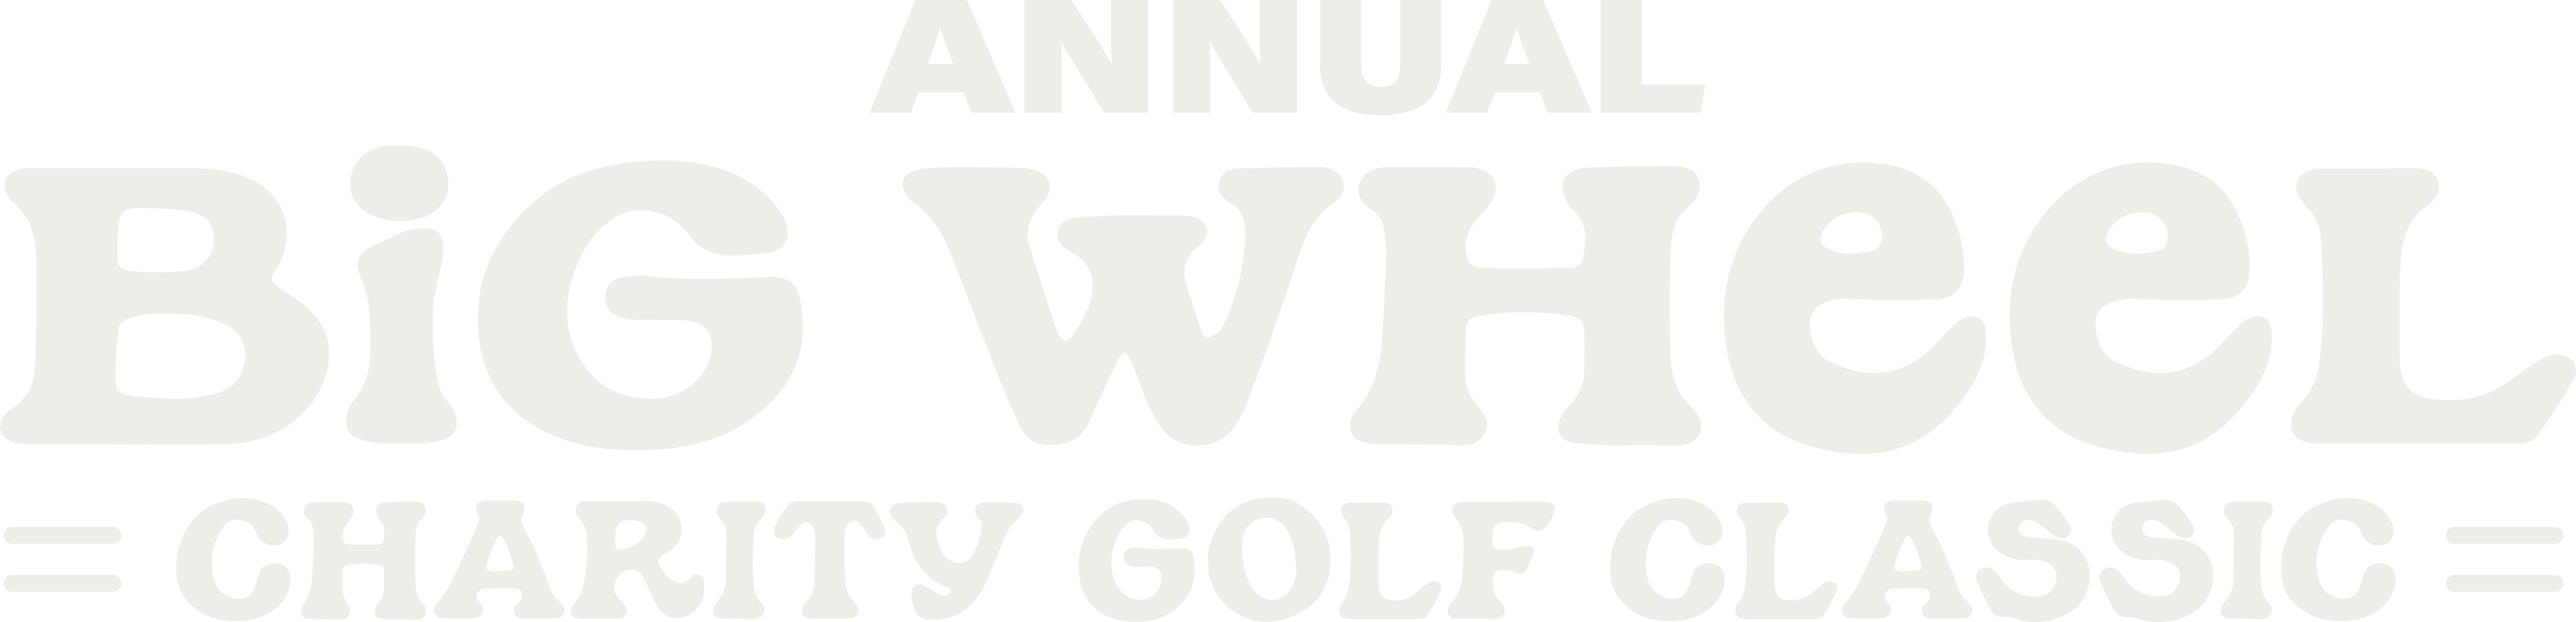 Big Wheel Charity Golf Classic